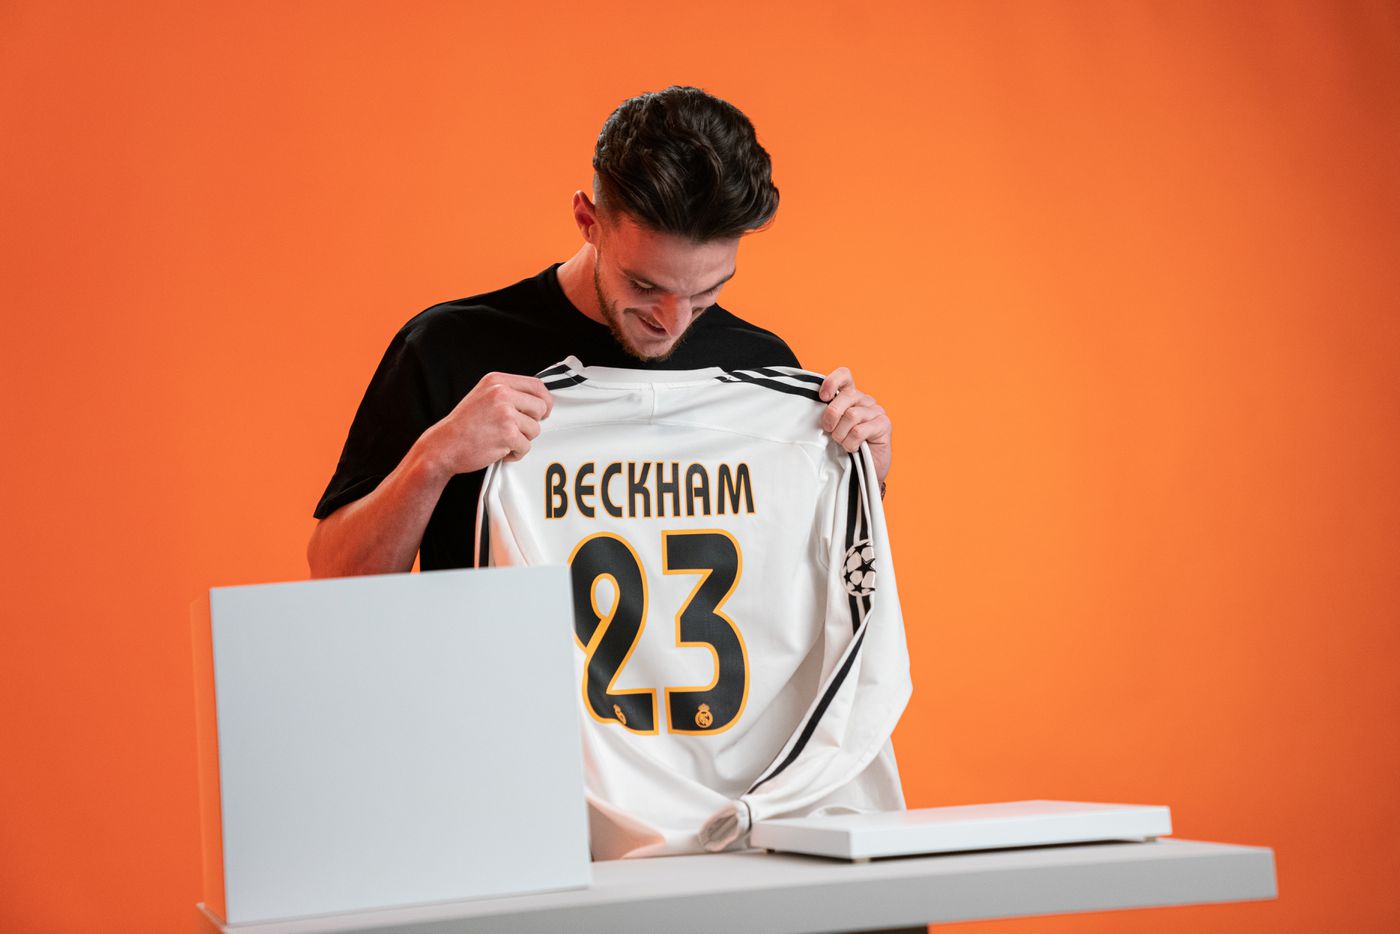 Declan Beckham 2